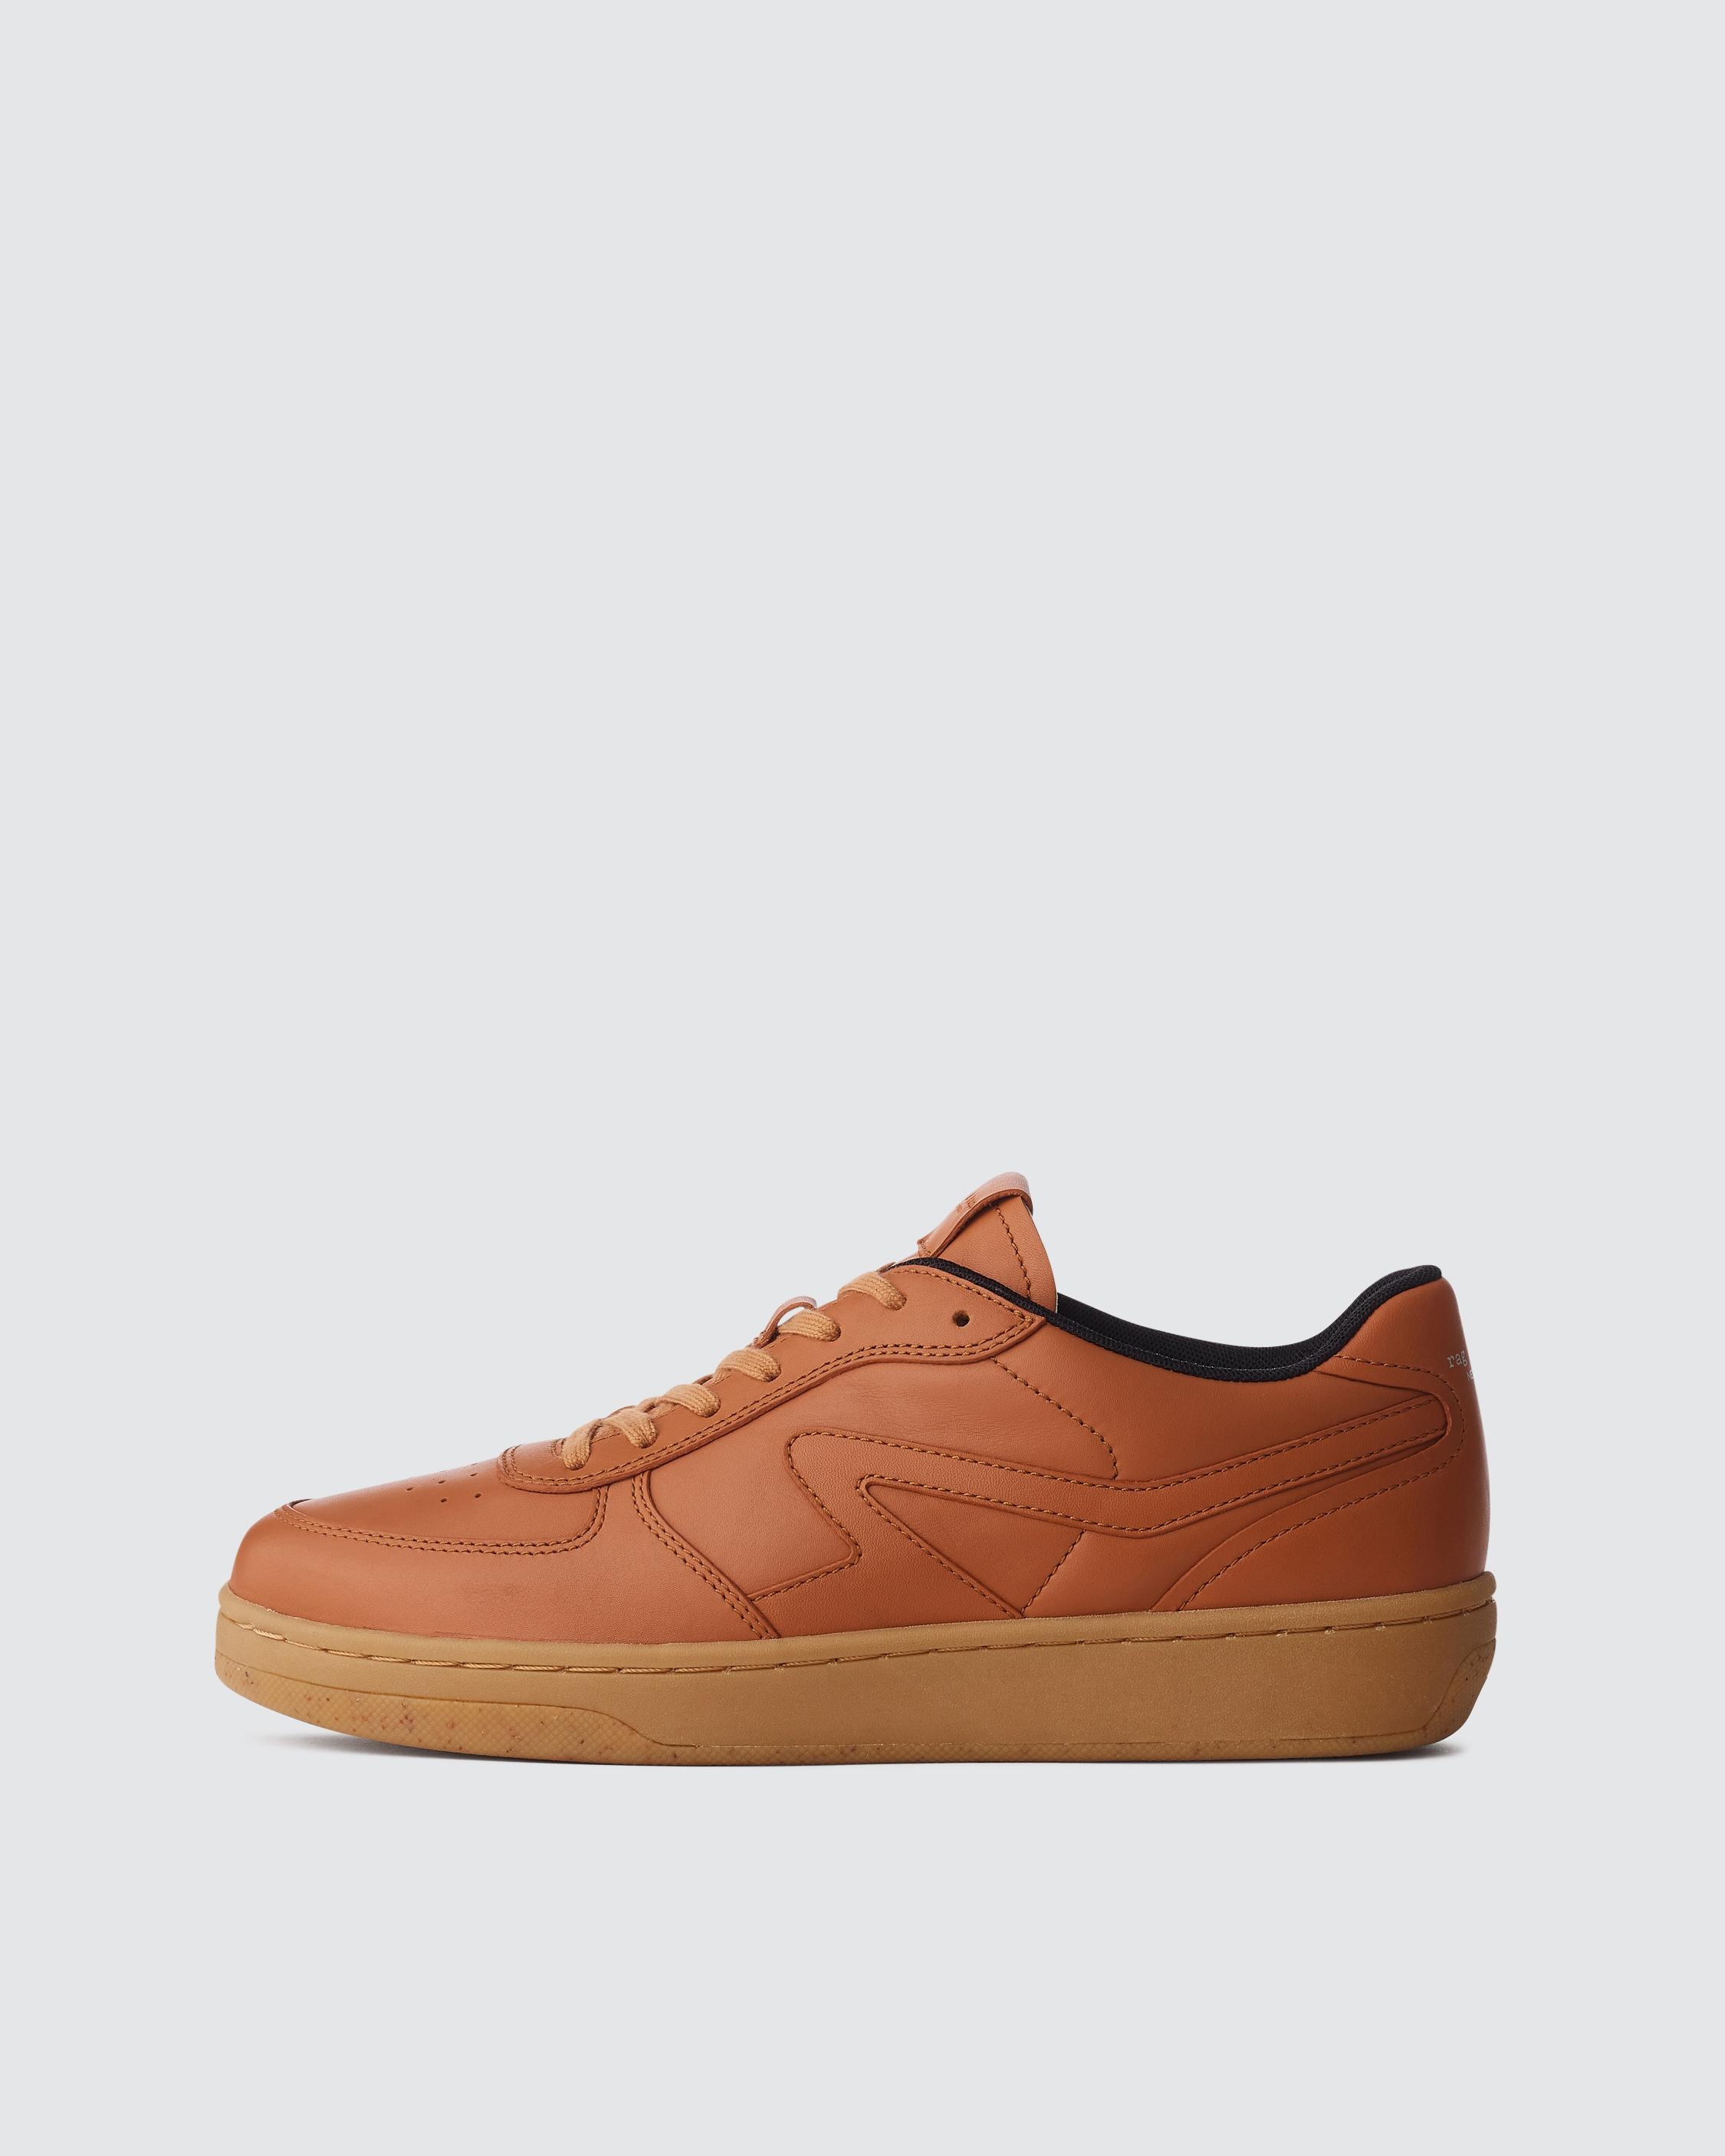 Retro Court Sneaker - Leather
Low Top Sneaker - 1